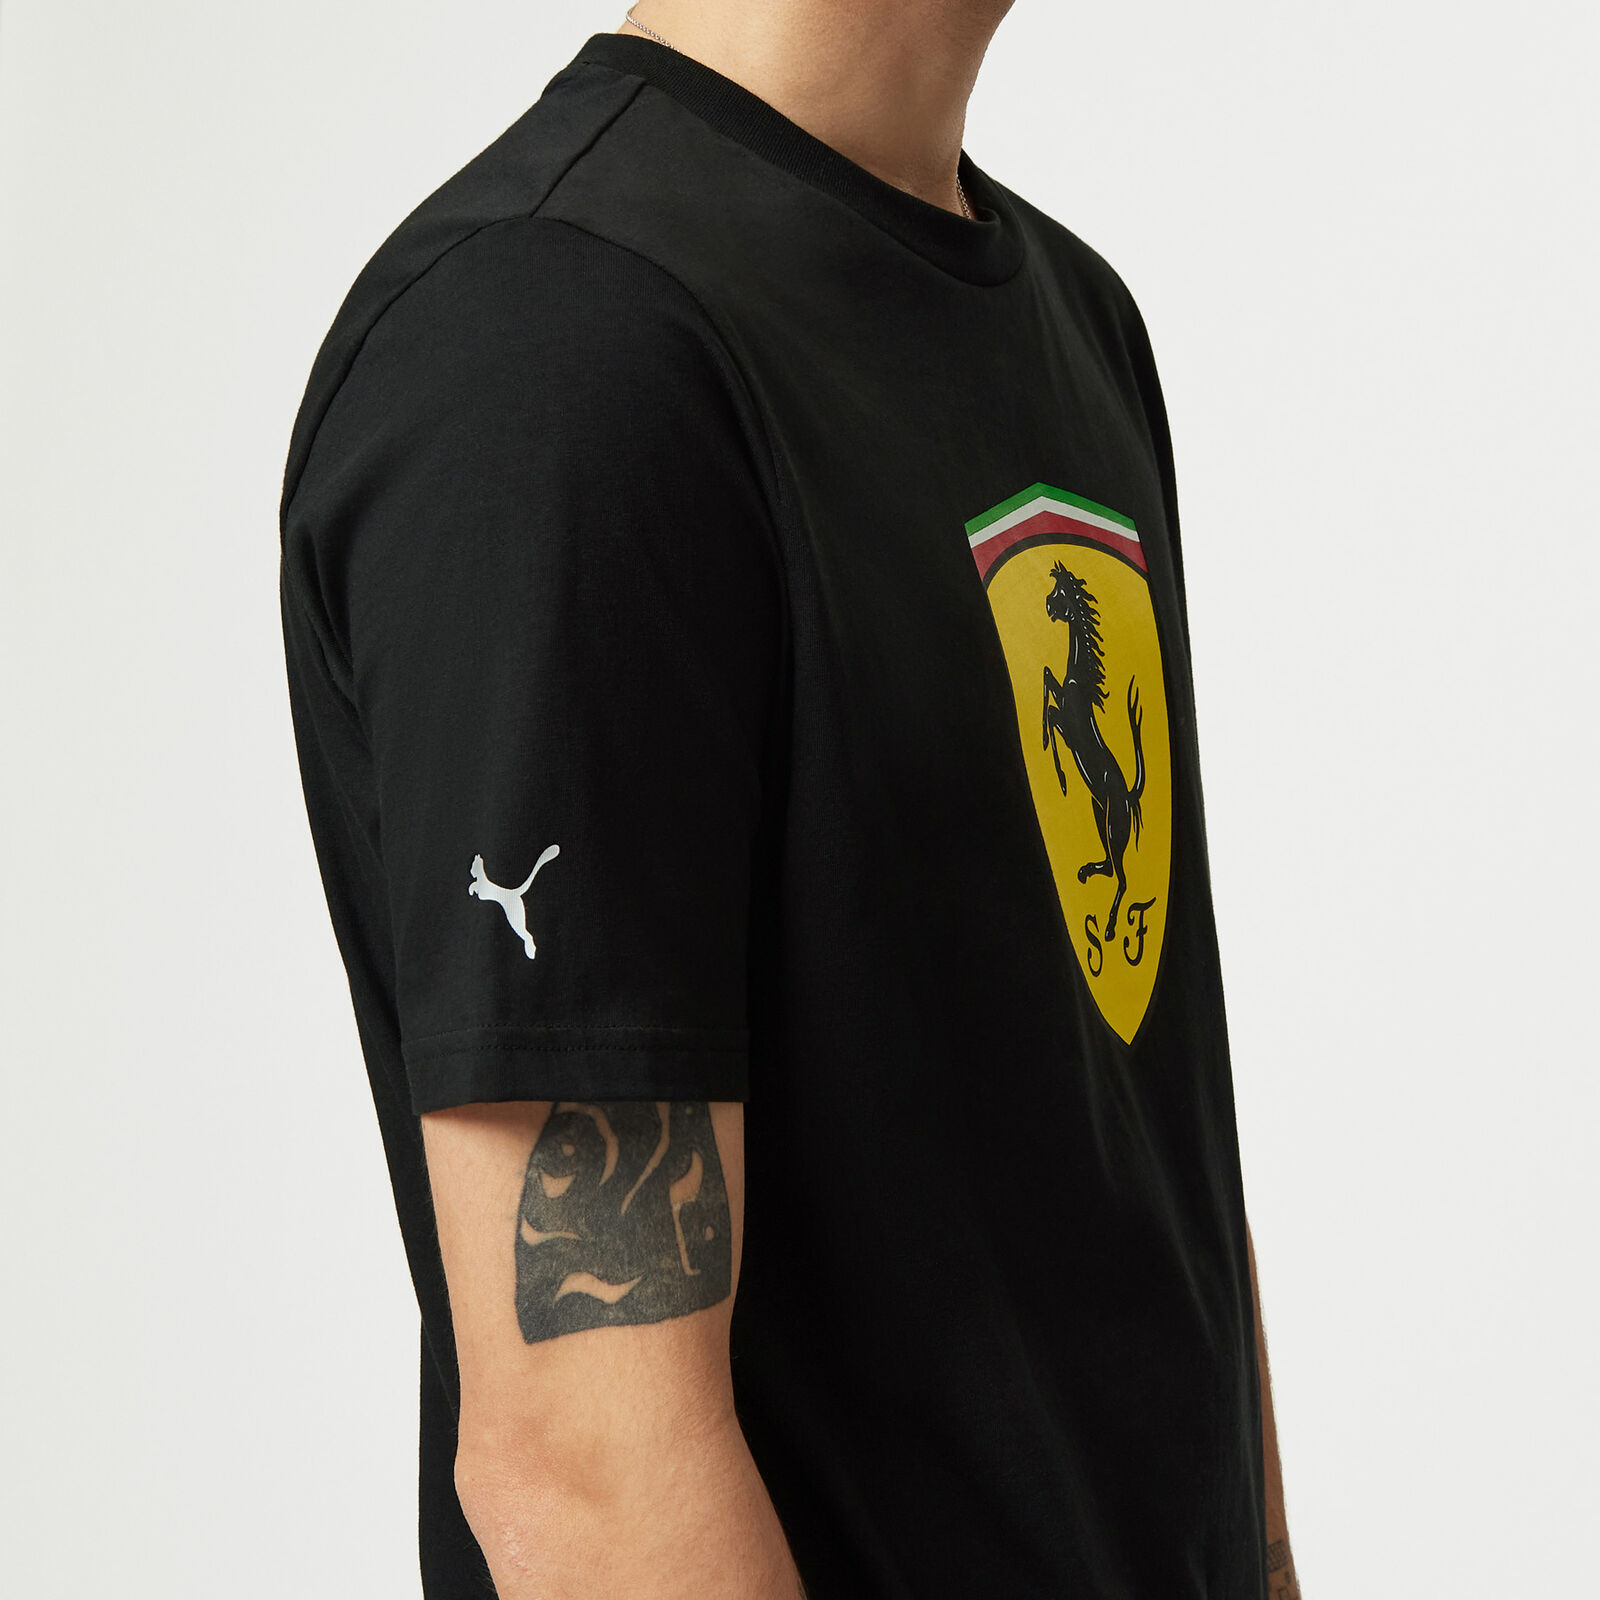 Ferrari T-Shirt